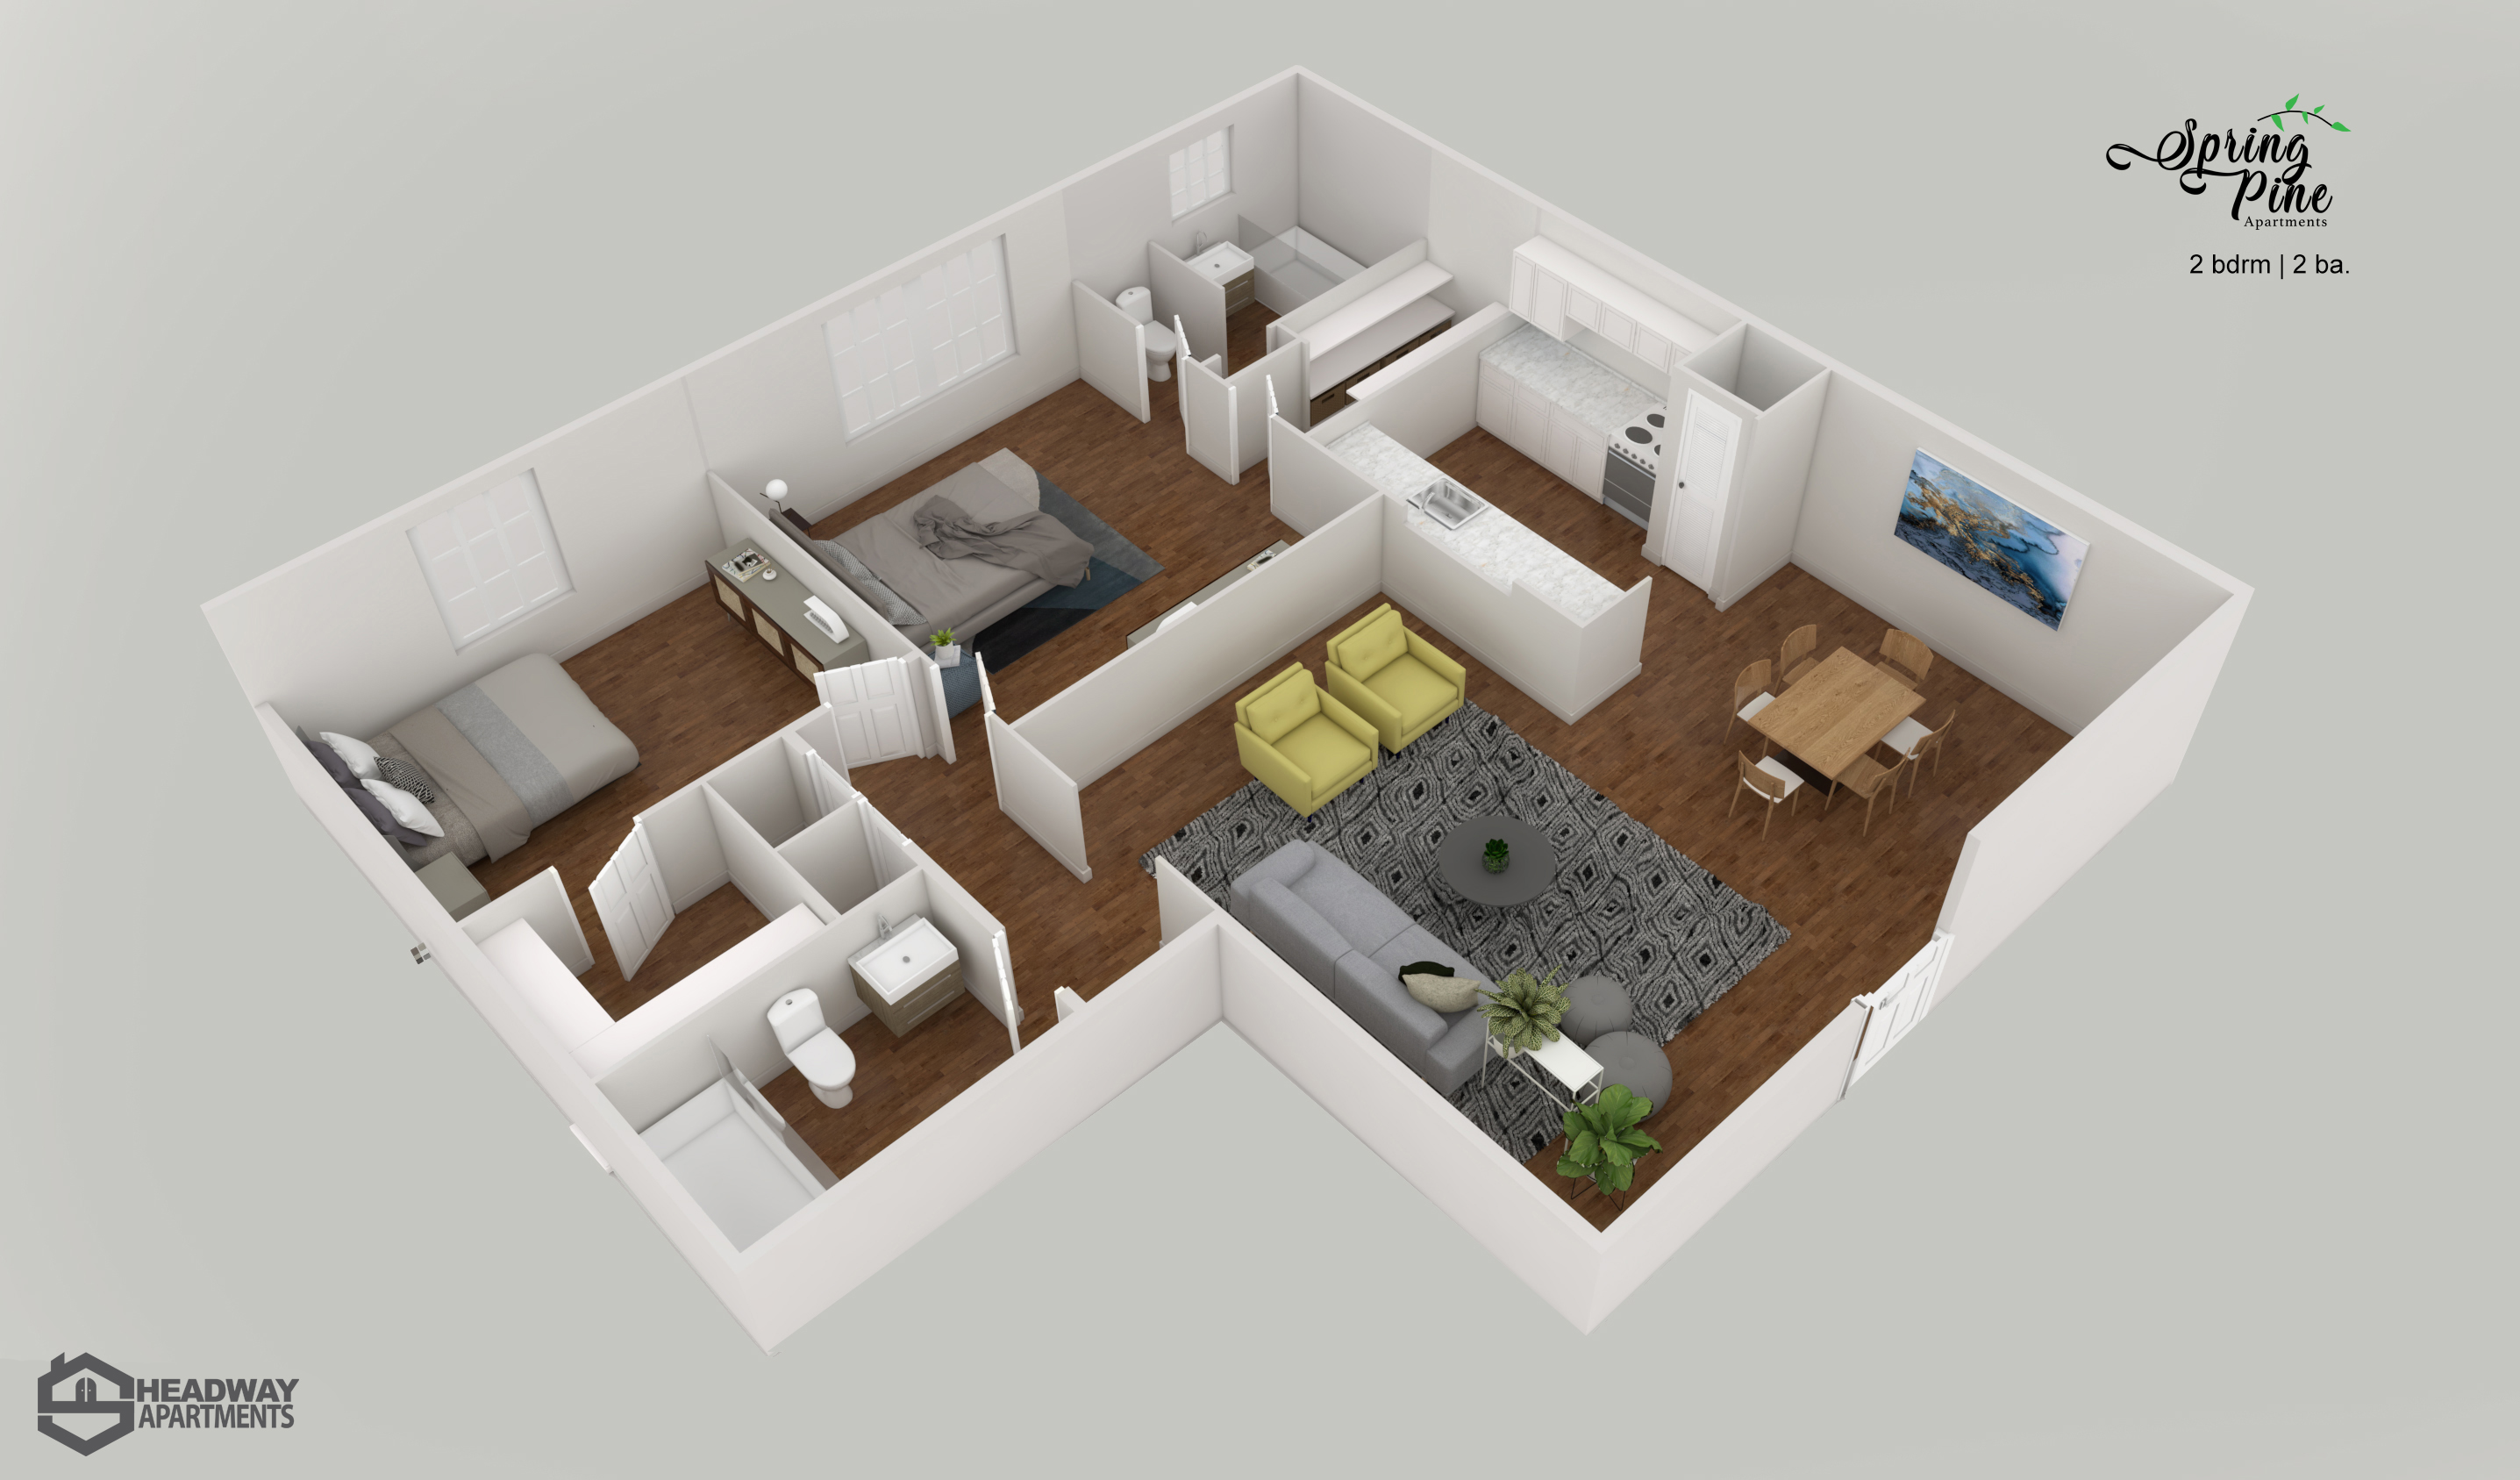 2 bedroom 2 bath-Spring Pine Apartments_Houston_Headway Apartments.jpg